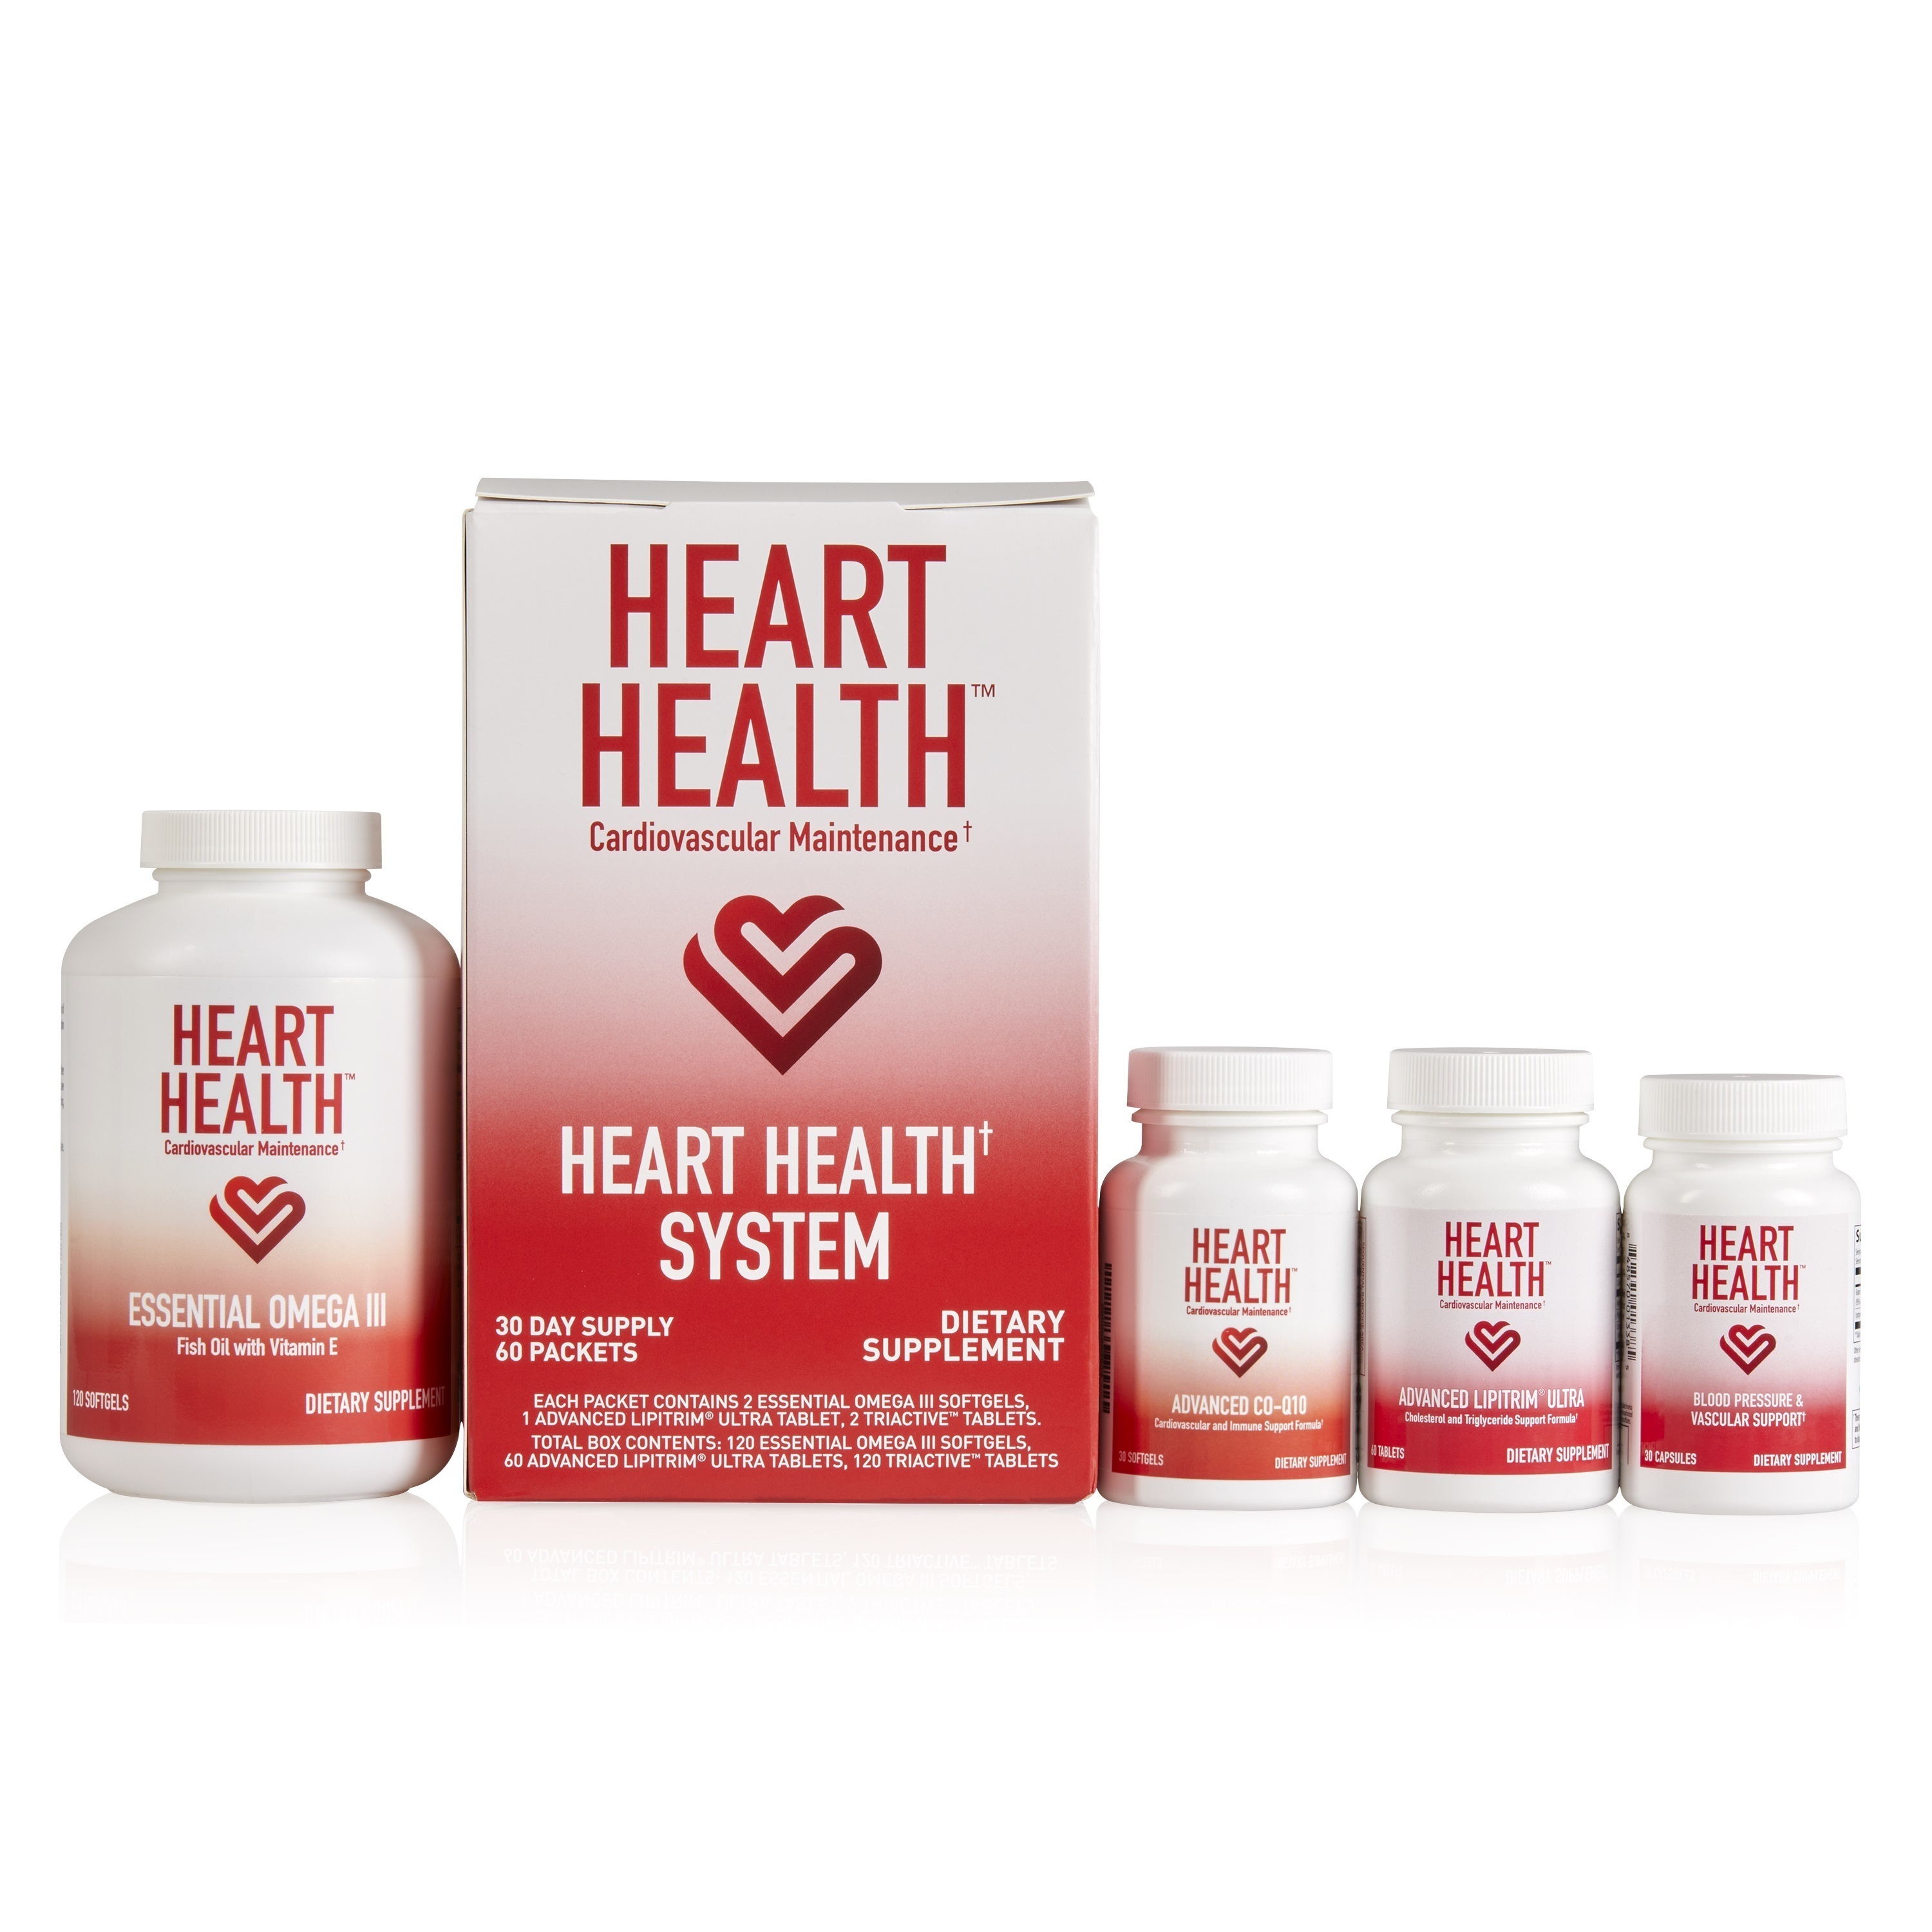 Heart Health&#8482; Advanced LipiTrim&#174; Ultra (Cholesterol and Triglyceride Support Formula) alternate image